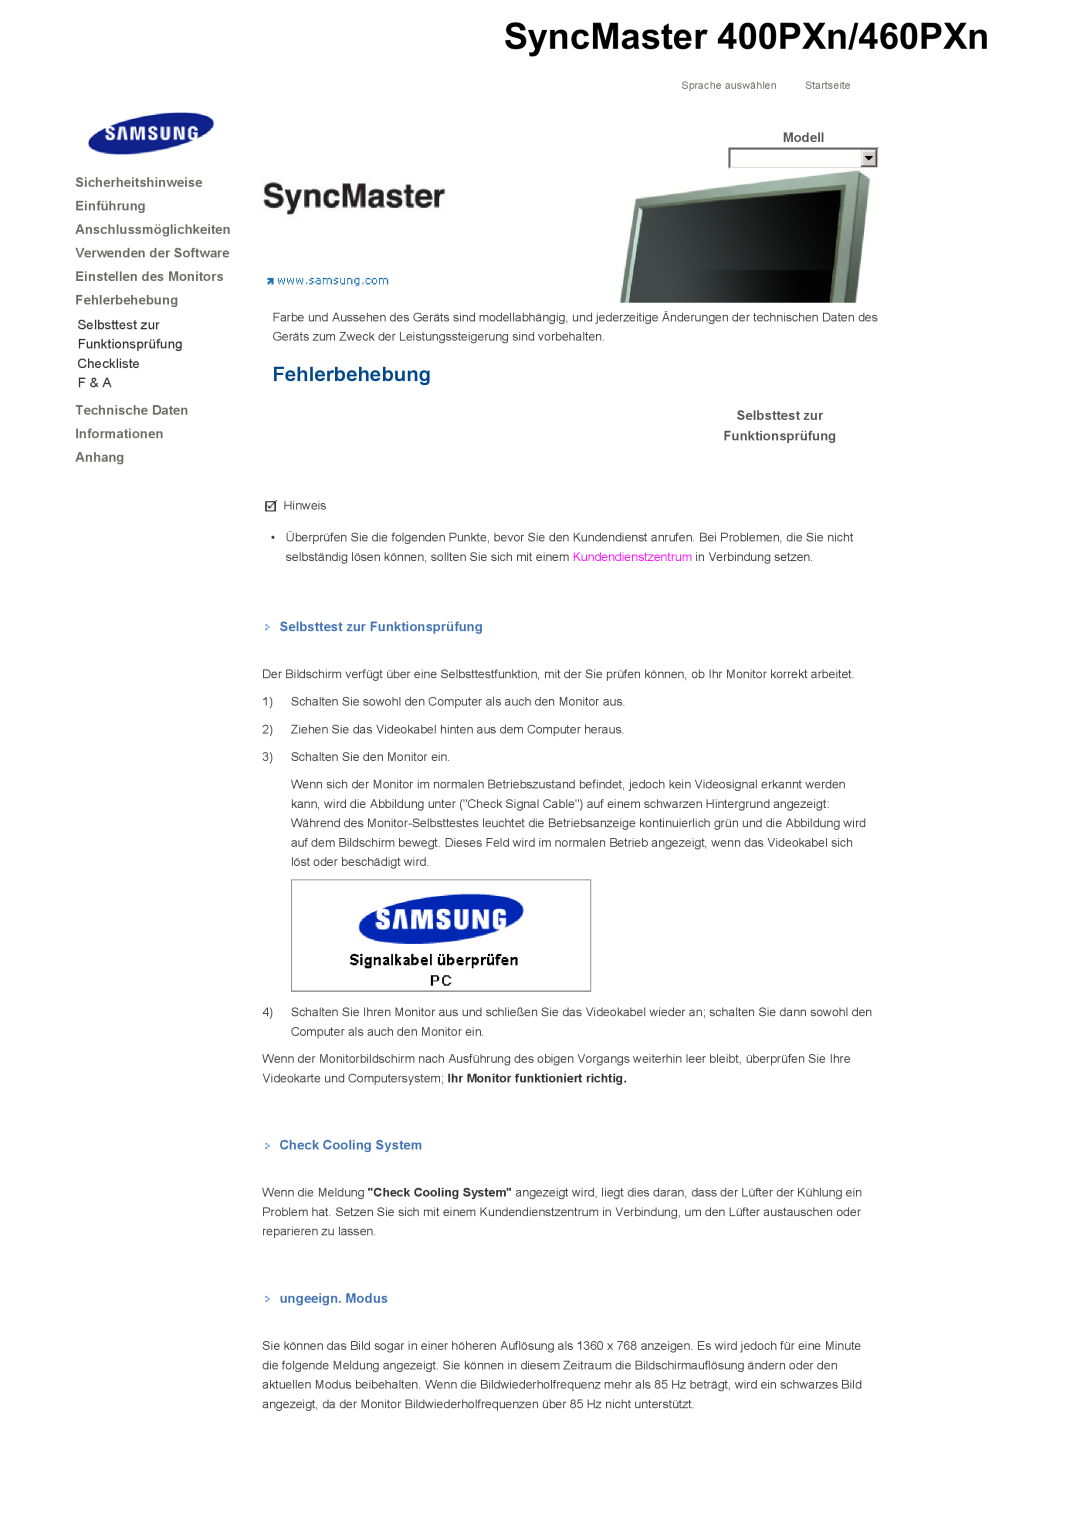 Samsung LS46BHPNS/EDC manual SyncMaster 400PXn/460PXn, Fehlerbehebung, Selbsttest zur Funktionsprüfung Checkliste F & A 